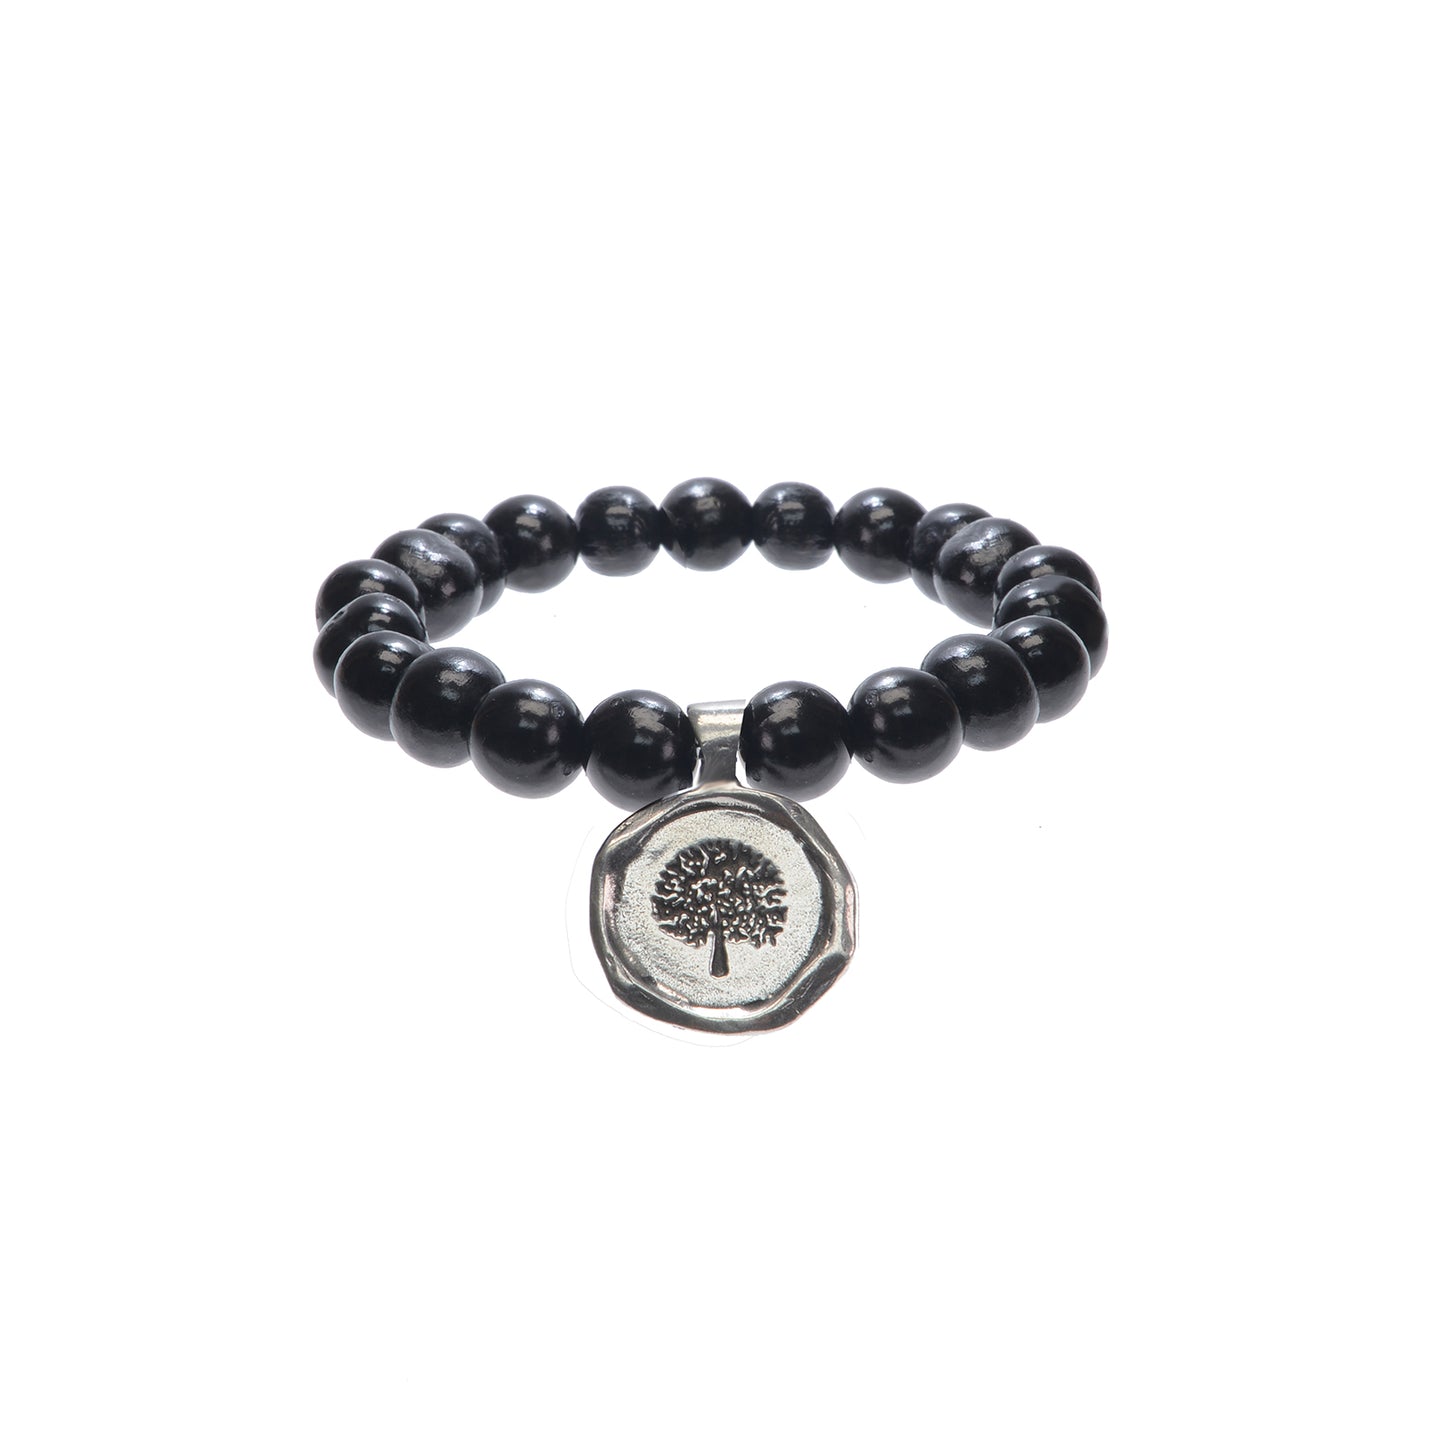 Acai Seeds Of Life Bracelet with Wax Seal - Black Beads